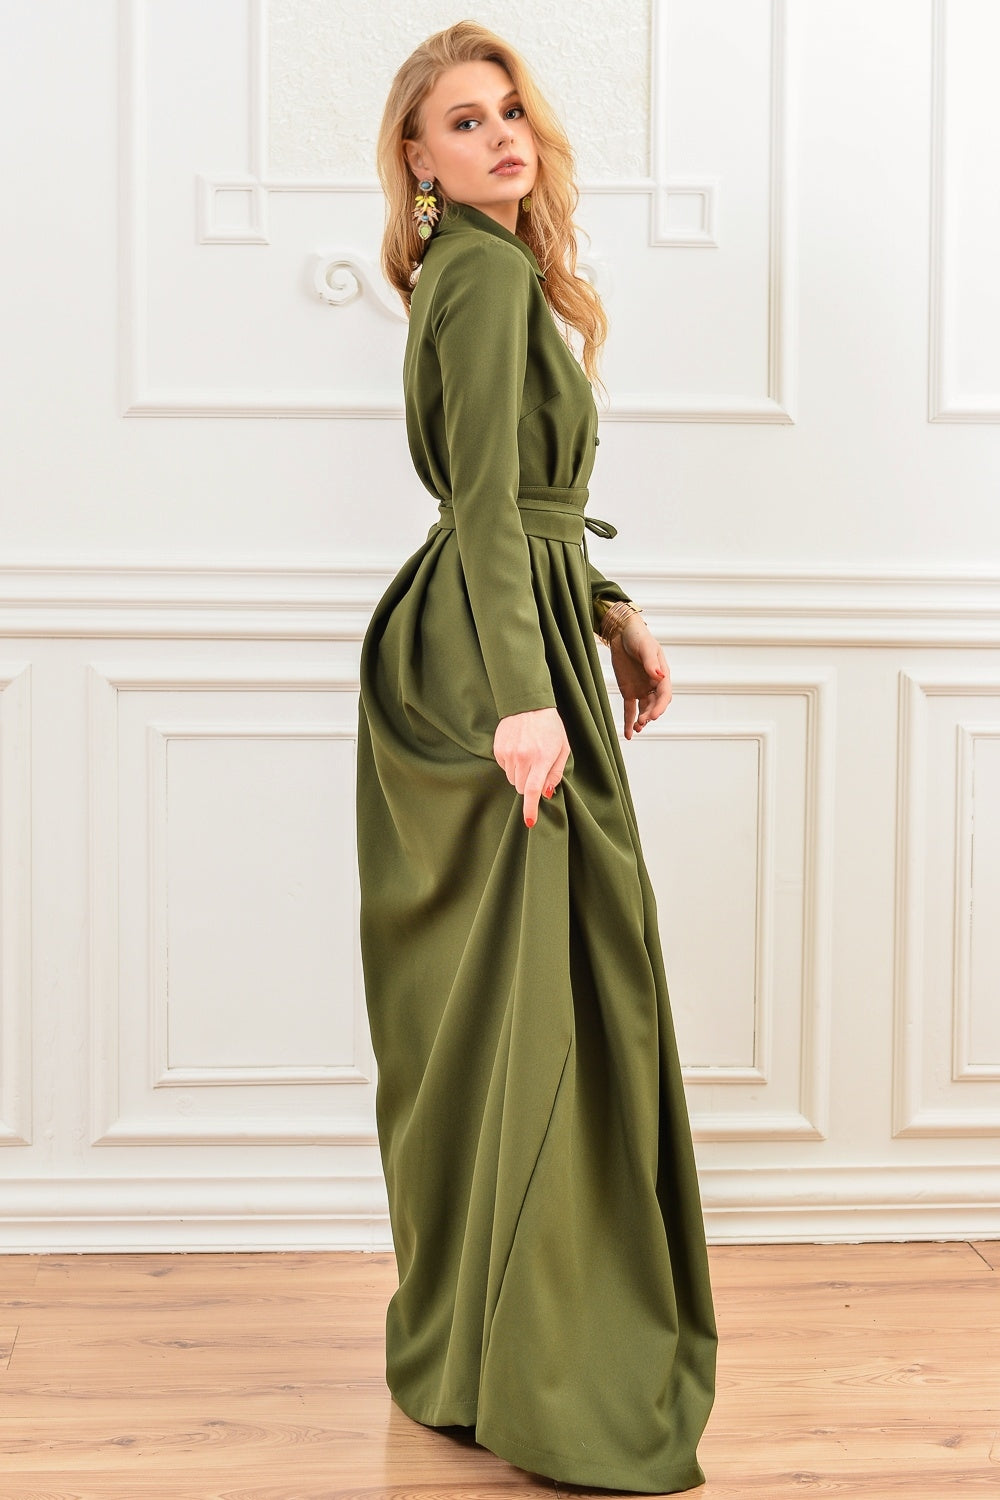 Haki zaļa garo kleita ar pogām priekšpusē